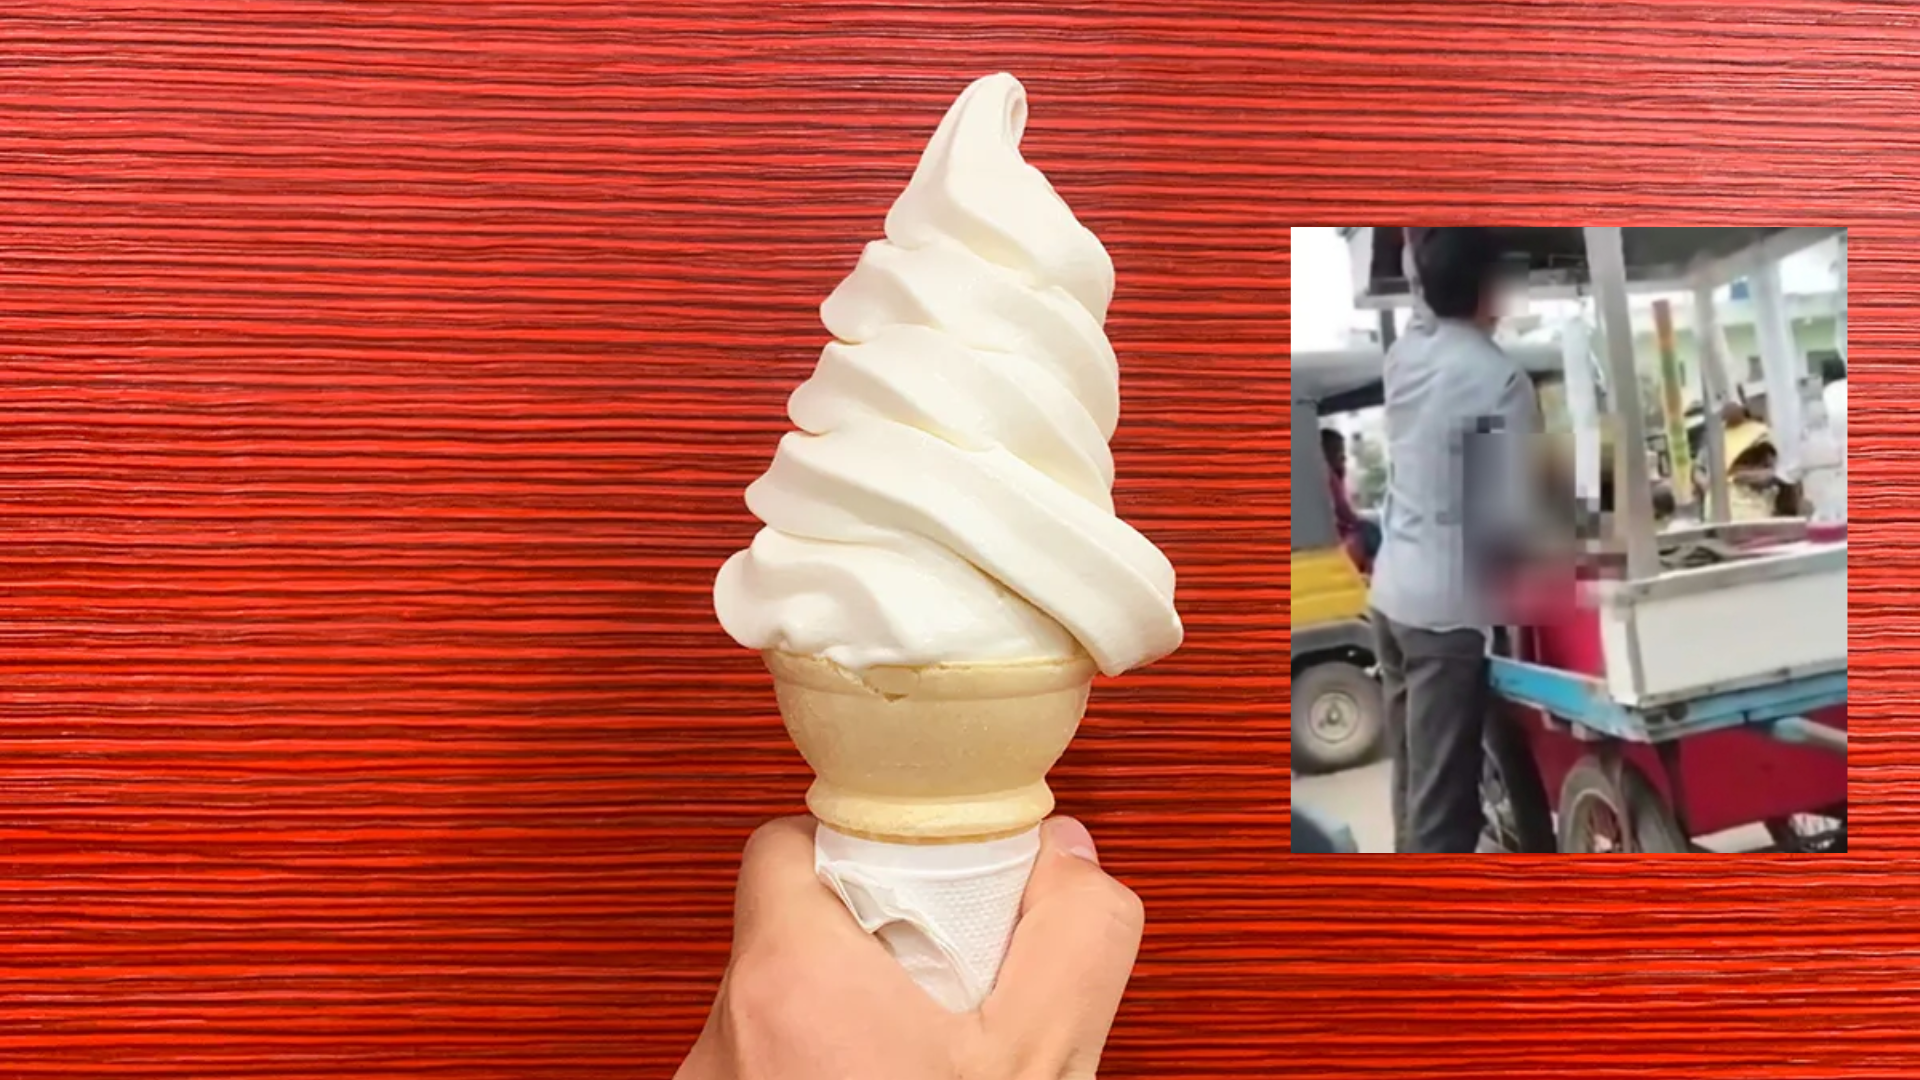 BIZZARE: Ice Cream Vendor Mixing Sperm in Ice Cream, Video Goes Viral